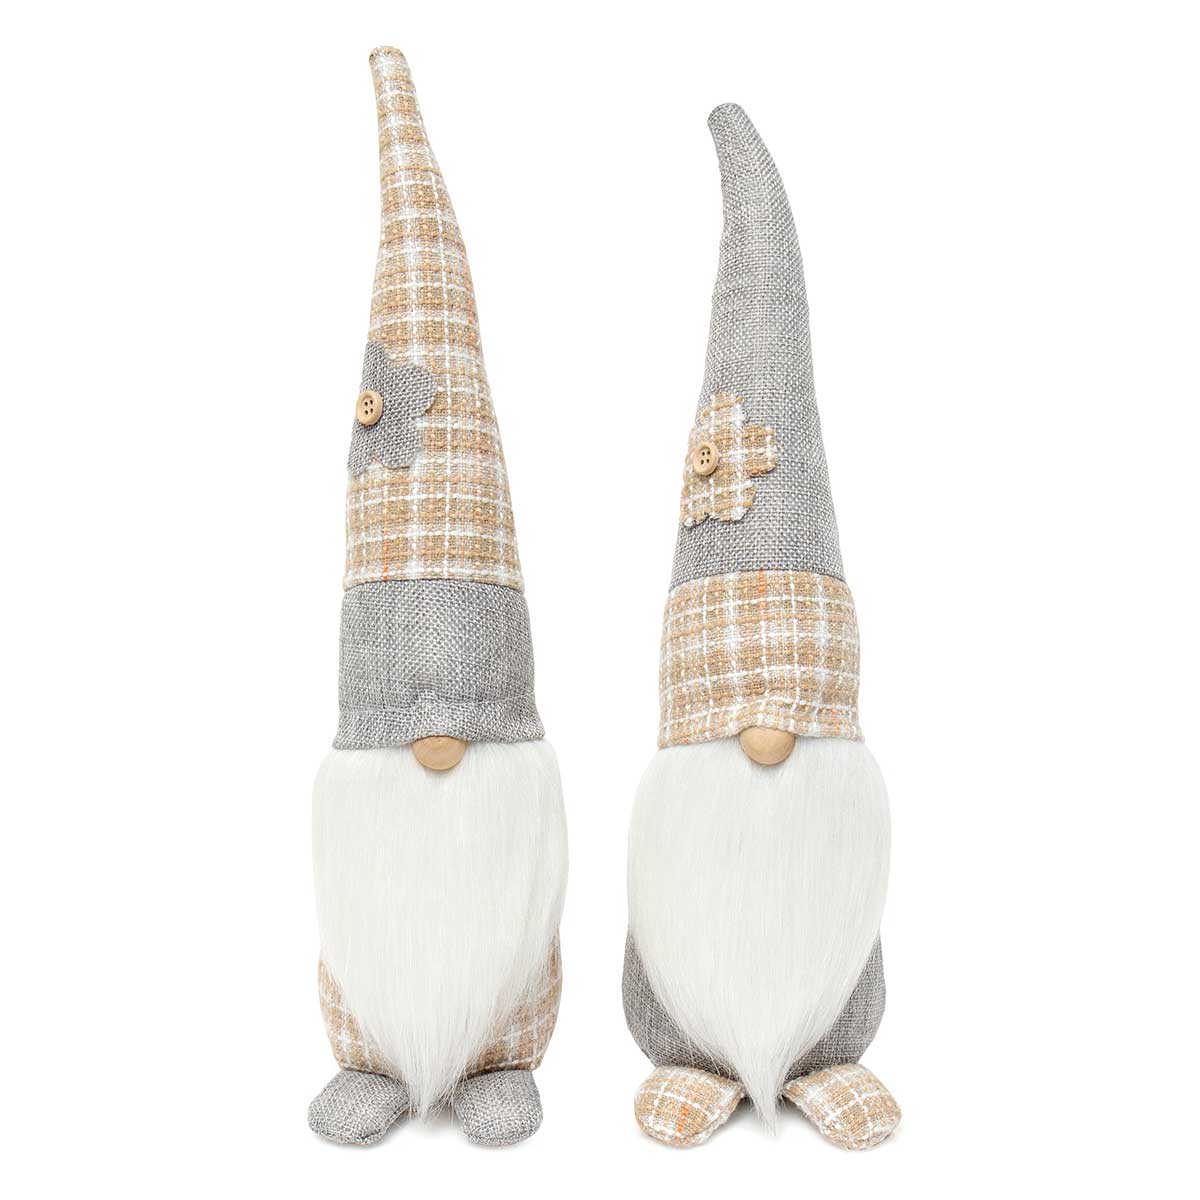 !Sunshine Boys Gnome with Wood Nose 15"